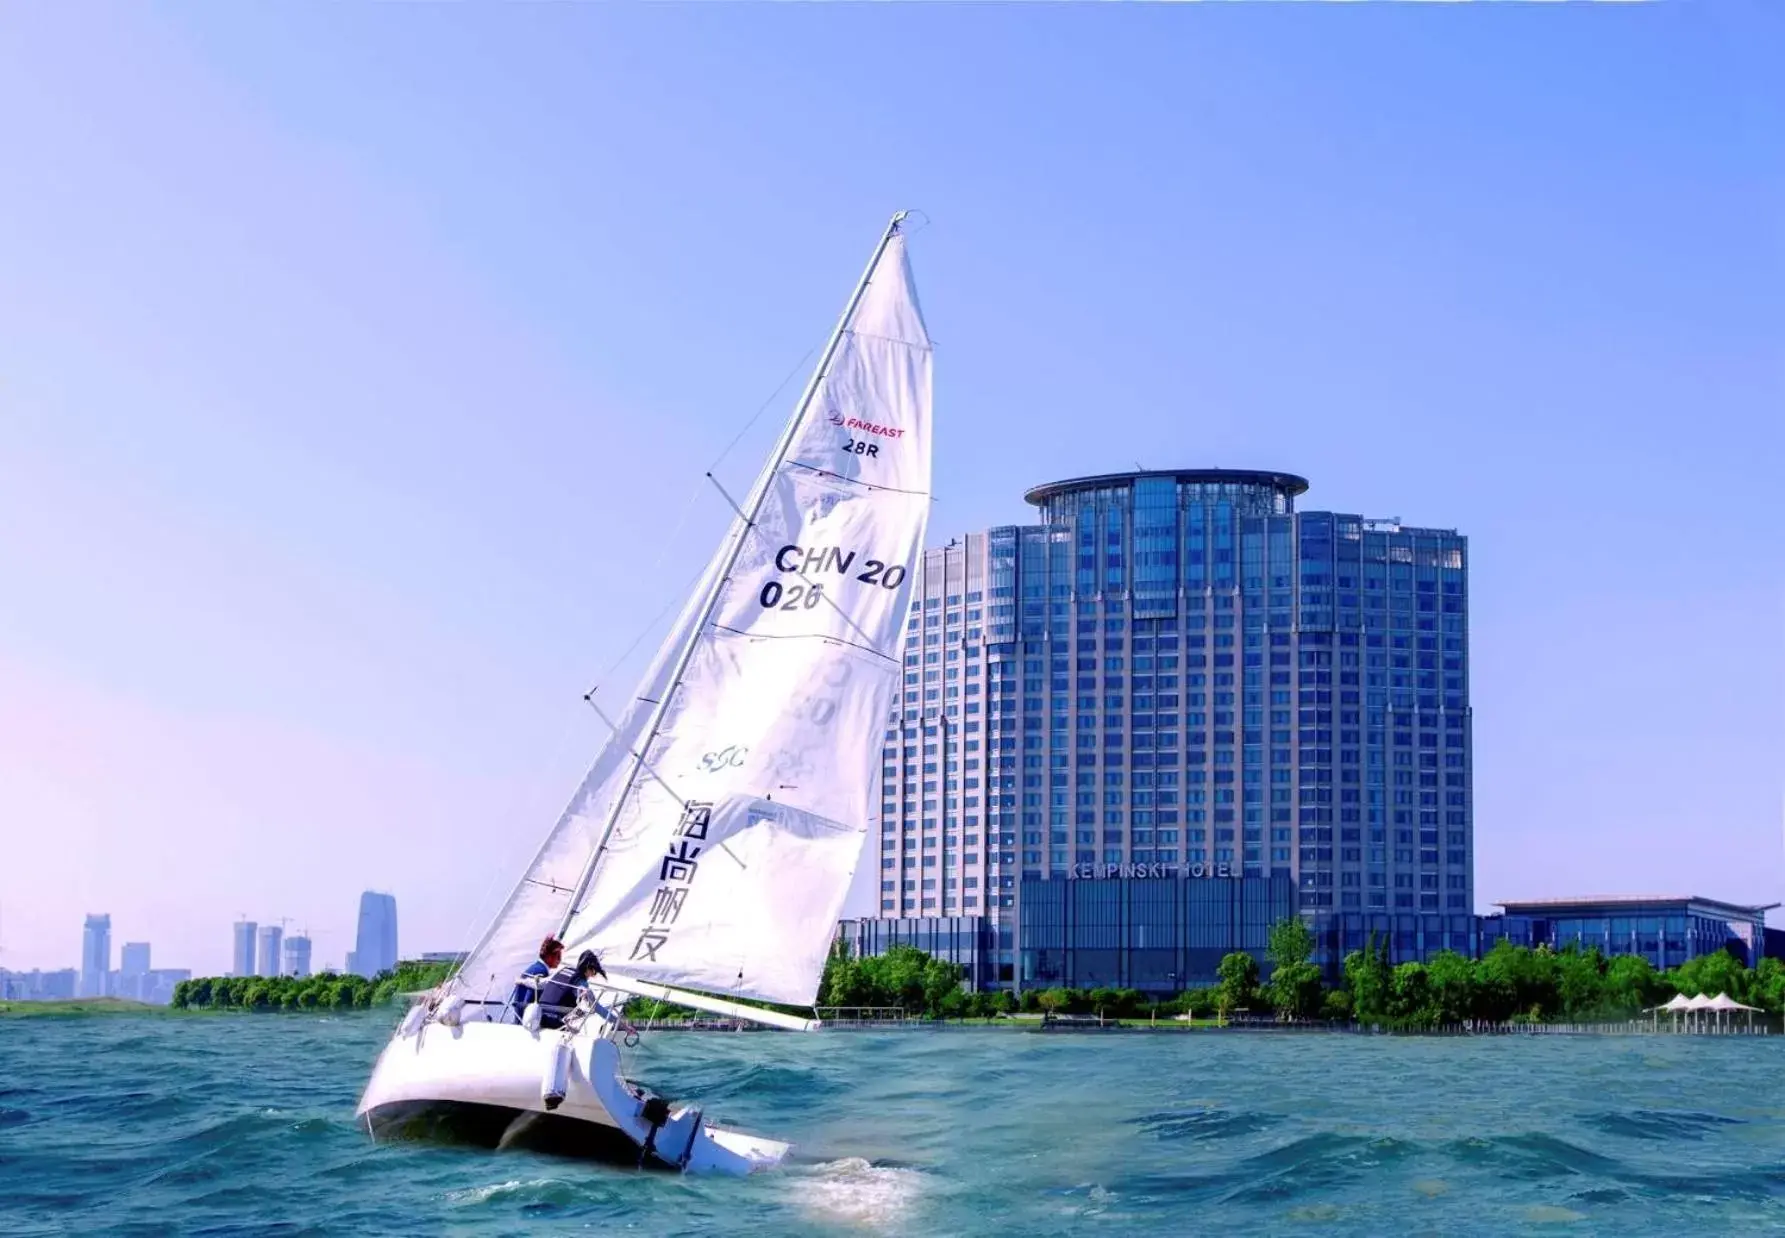 Nearby landmark, Windsurfing in Kempinski Hotel Suzhou